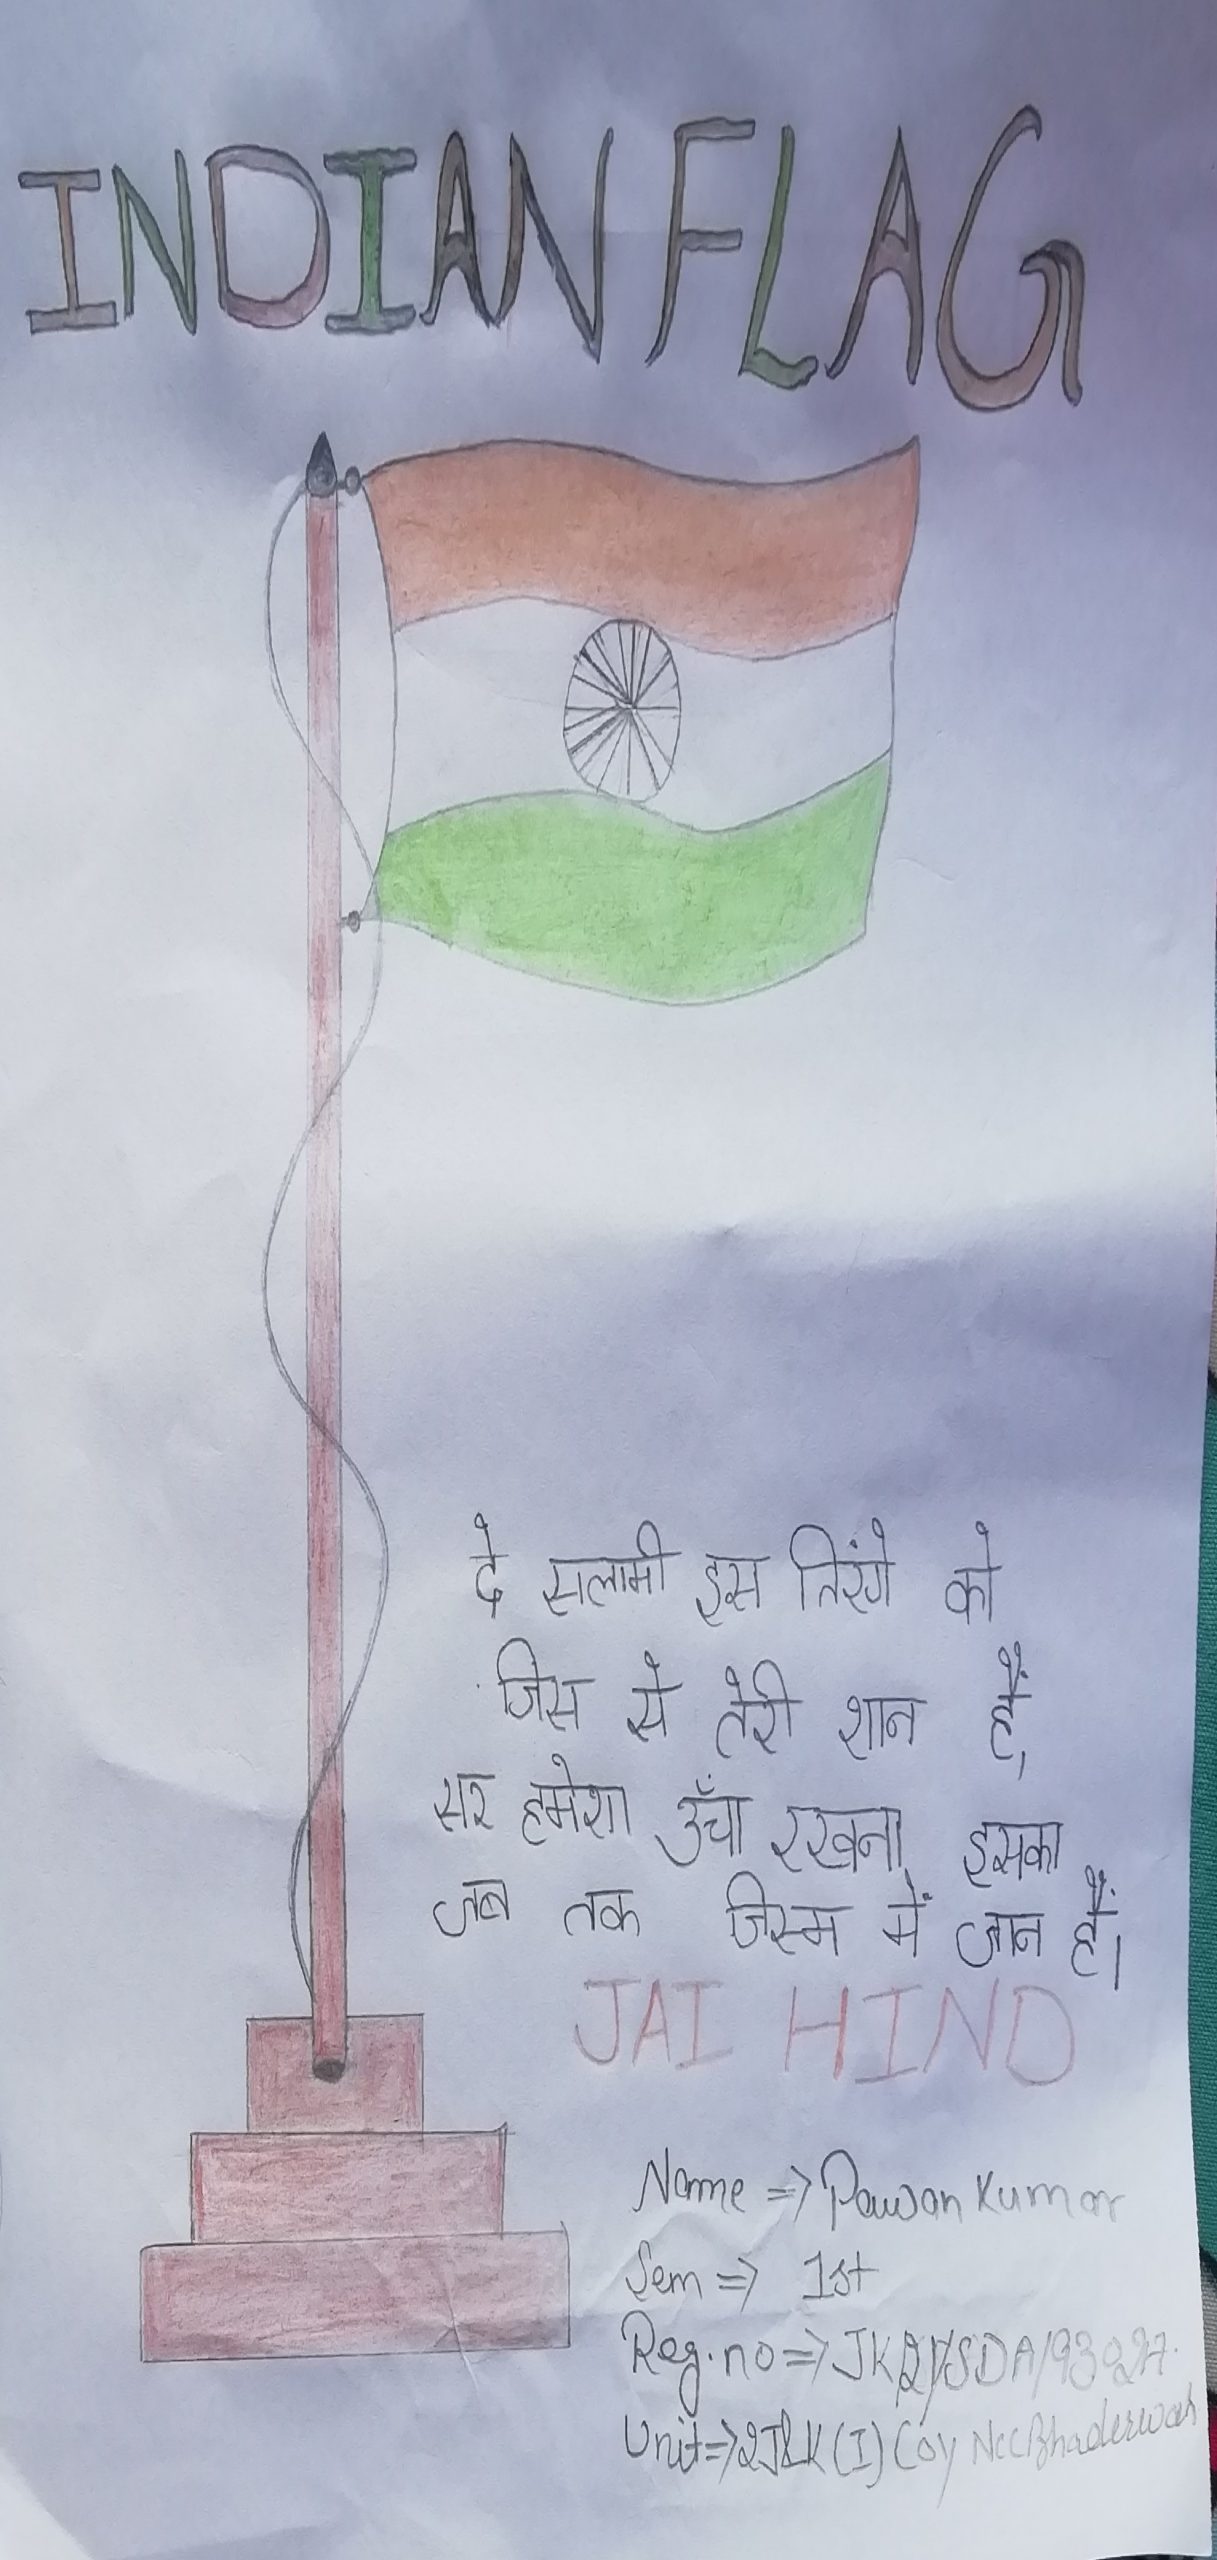 creative writing on patriotism